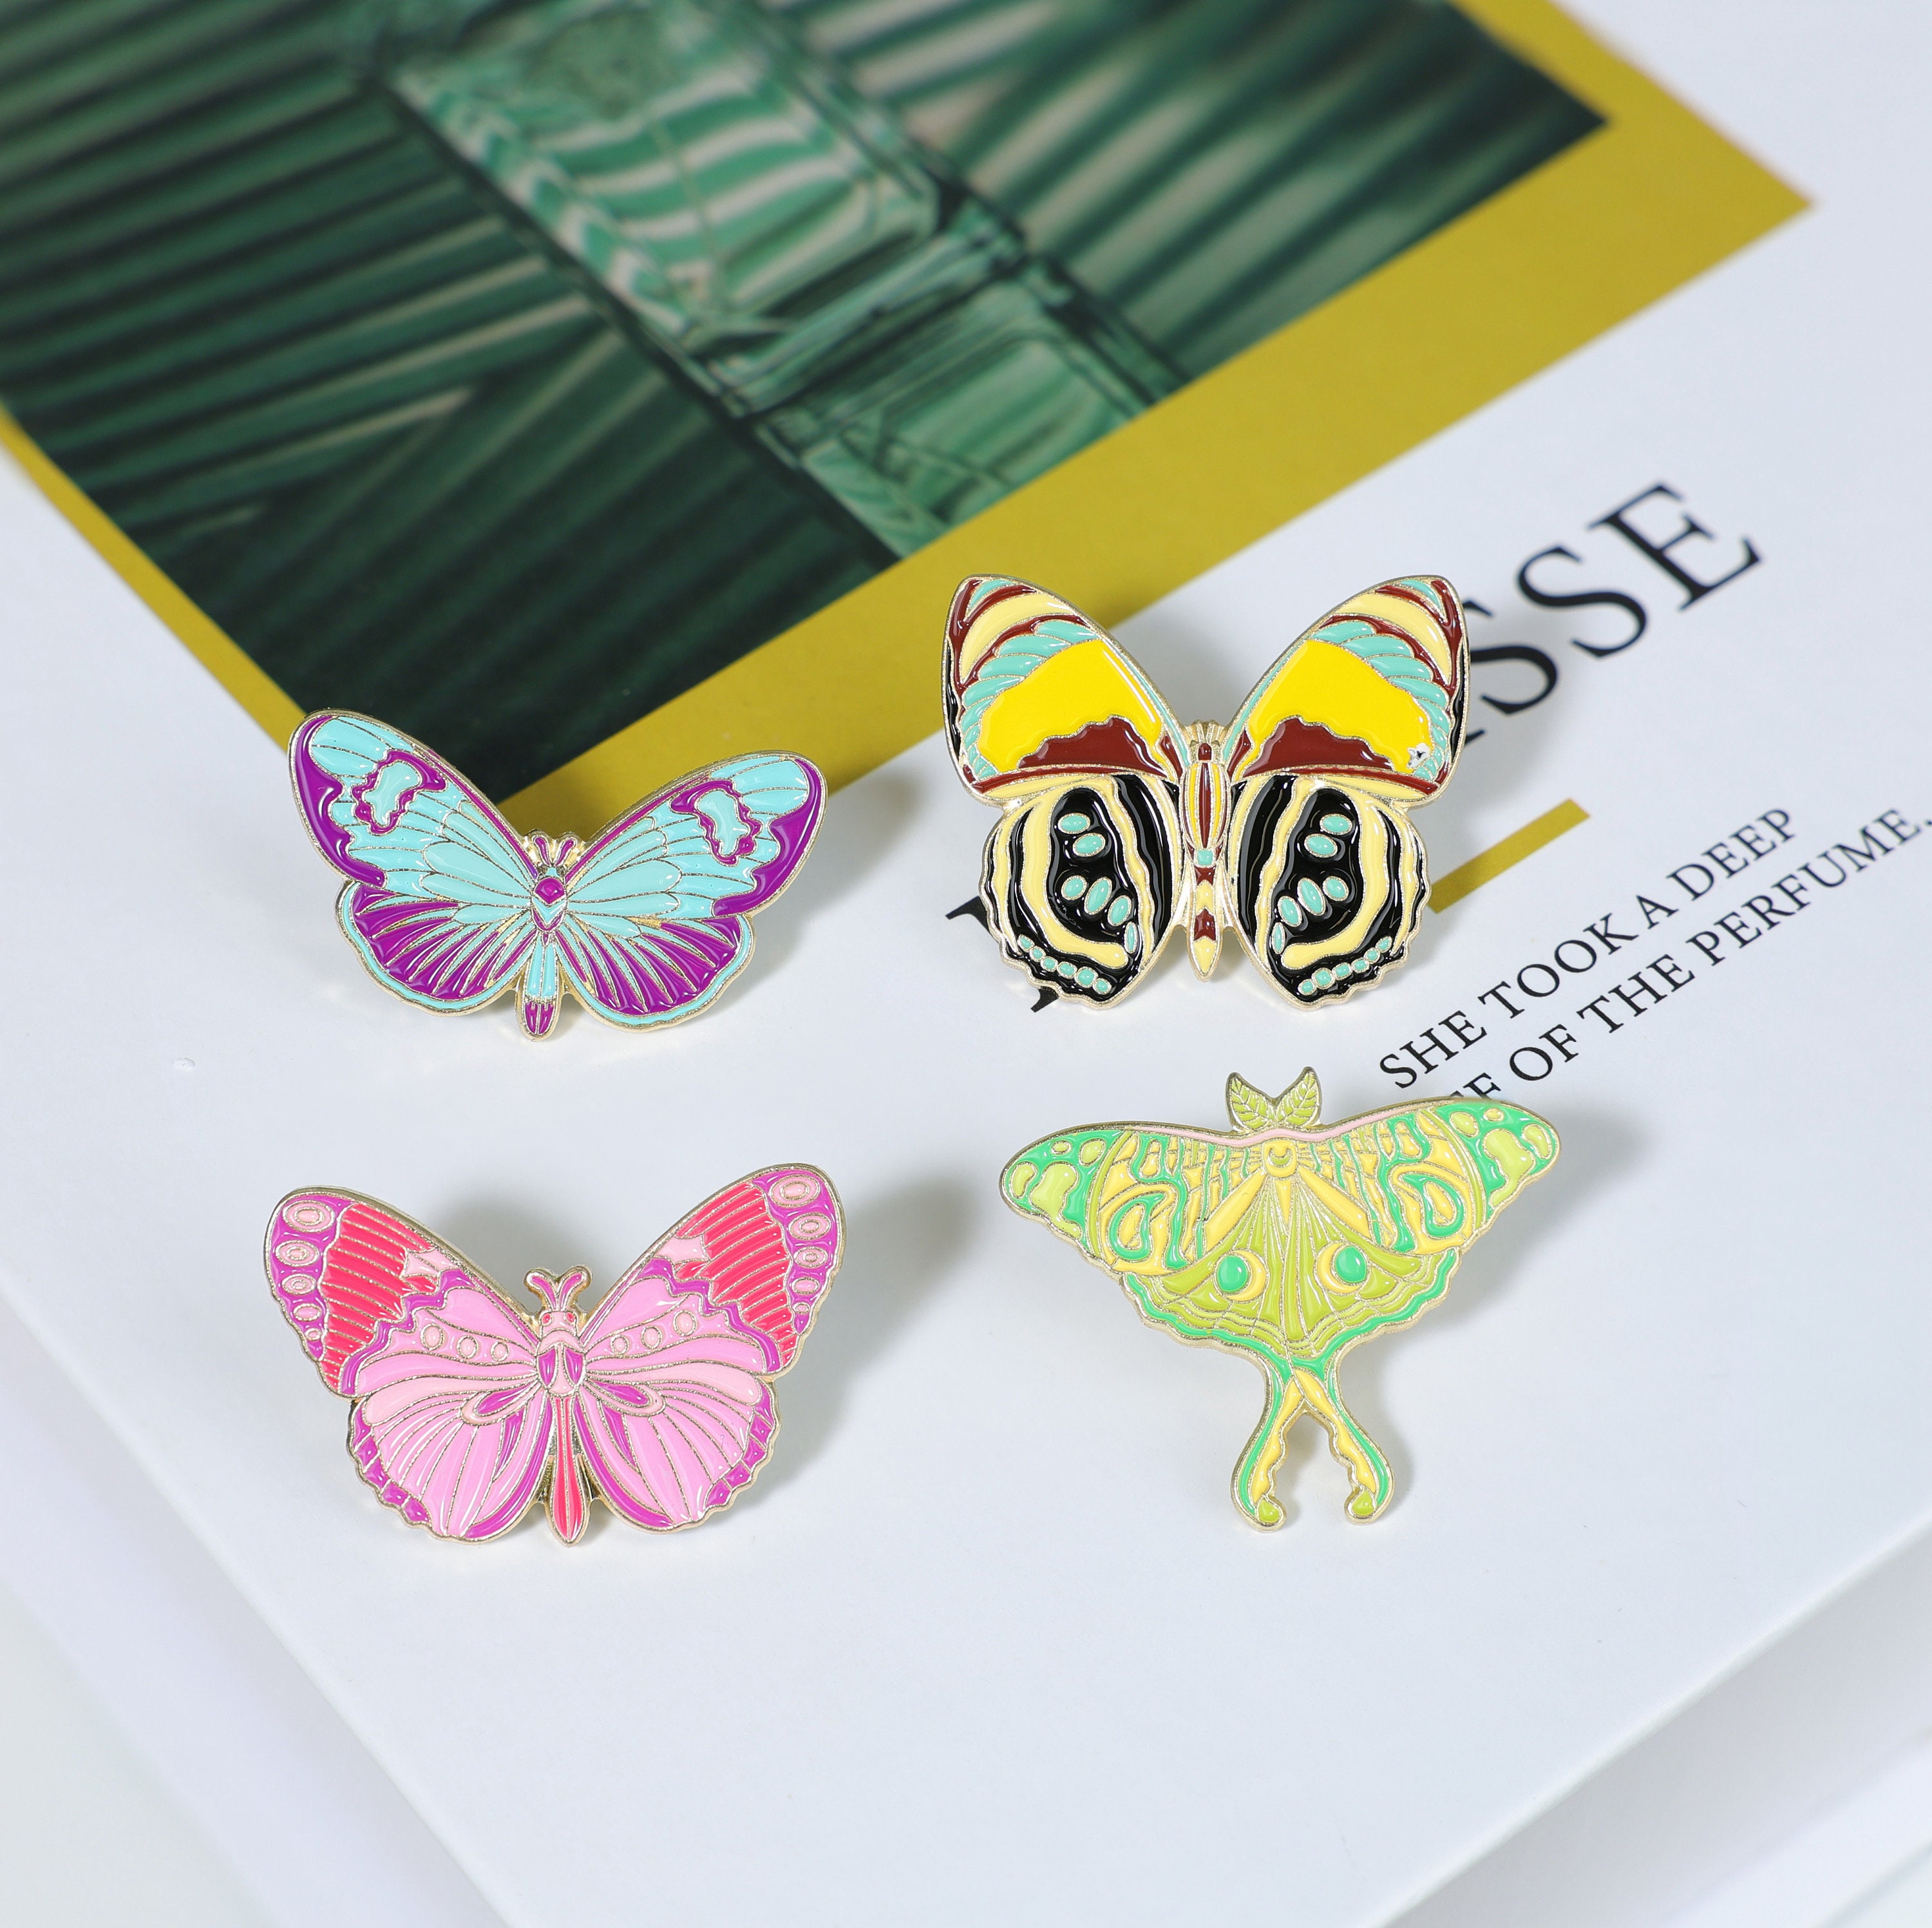 Flower Moon Market Split Butterfly Pronoun Pins They/them